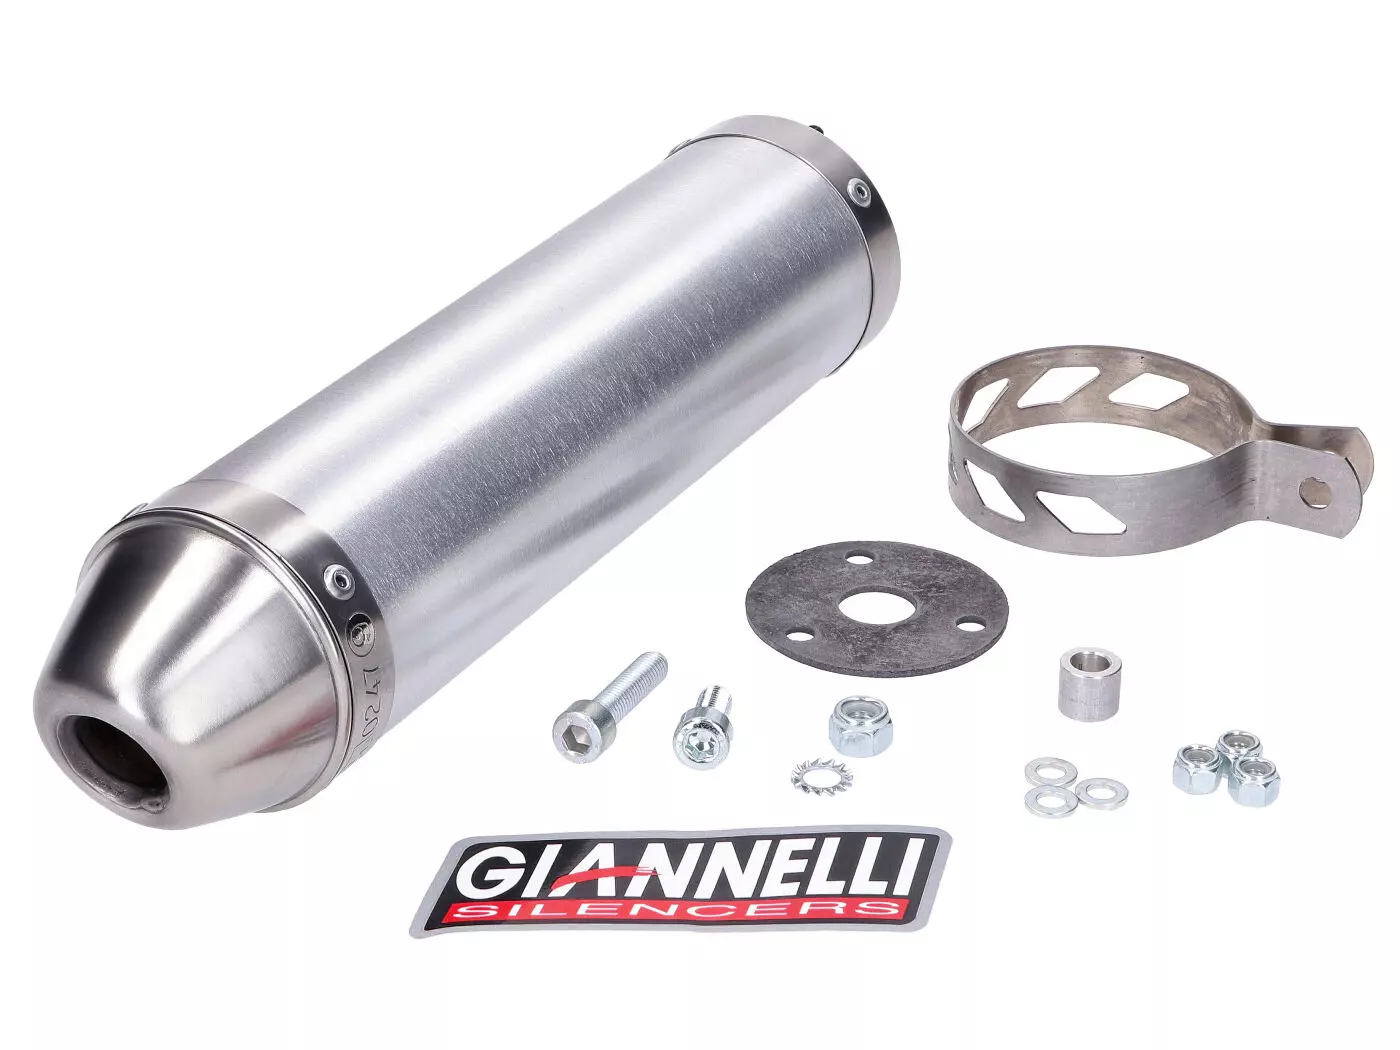 Einddemper Giannelli Alu voor Aprilia RS 50 99-06, Tuono 50 03-06